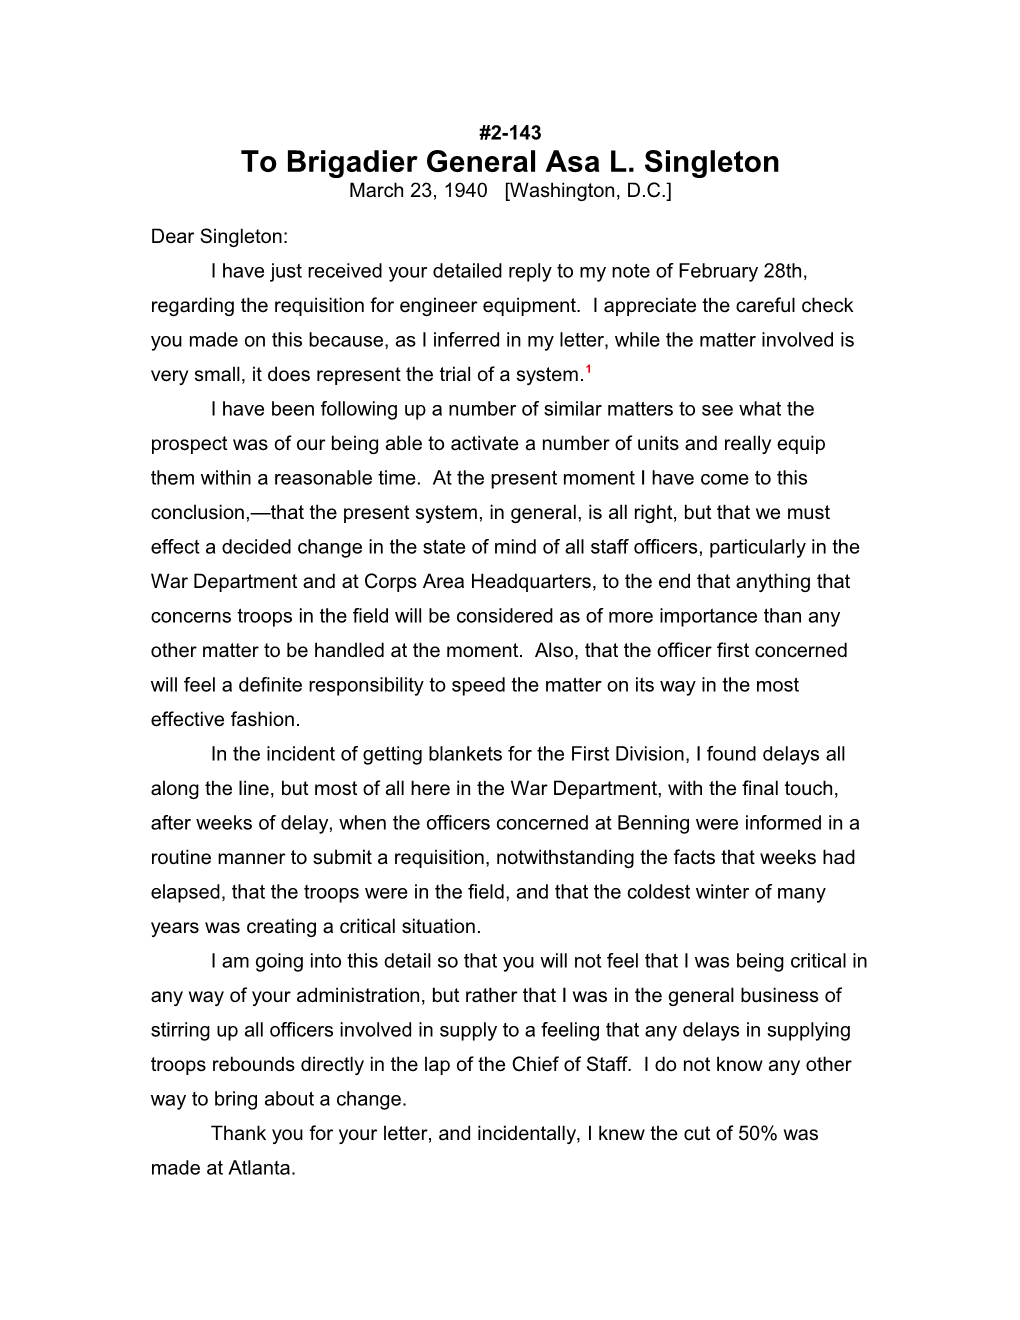 To Brigadier General Asa L. Singleton